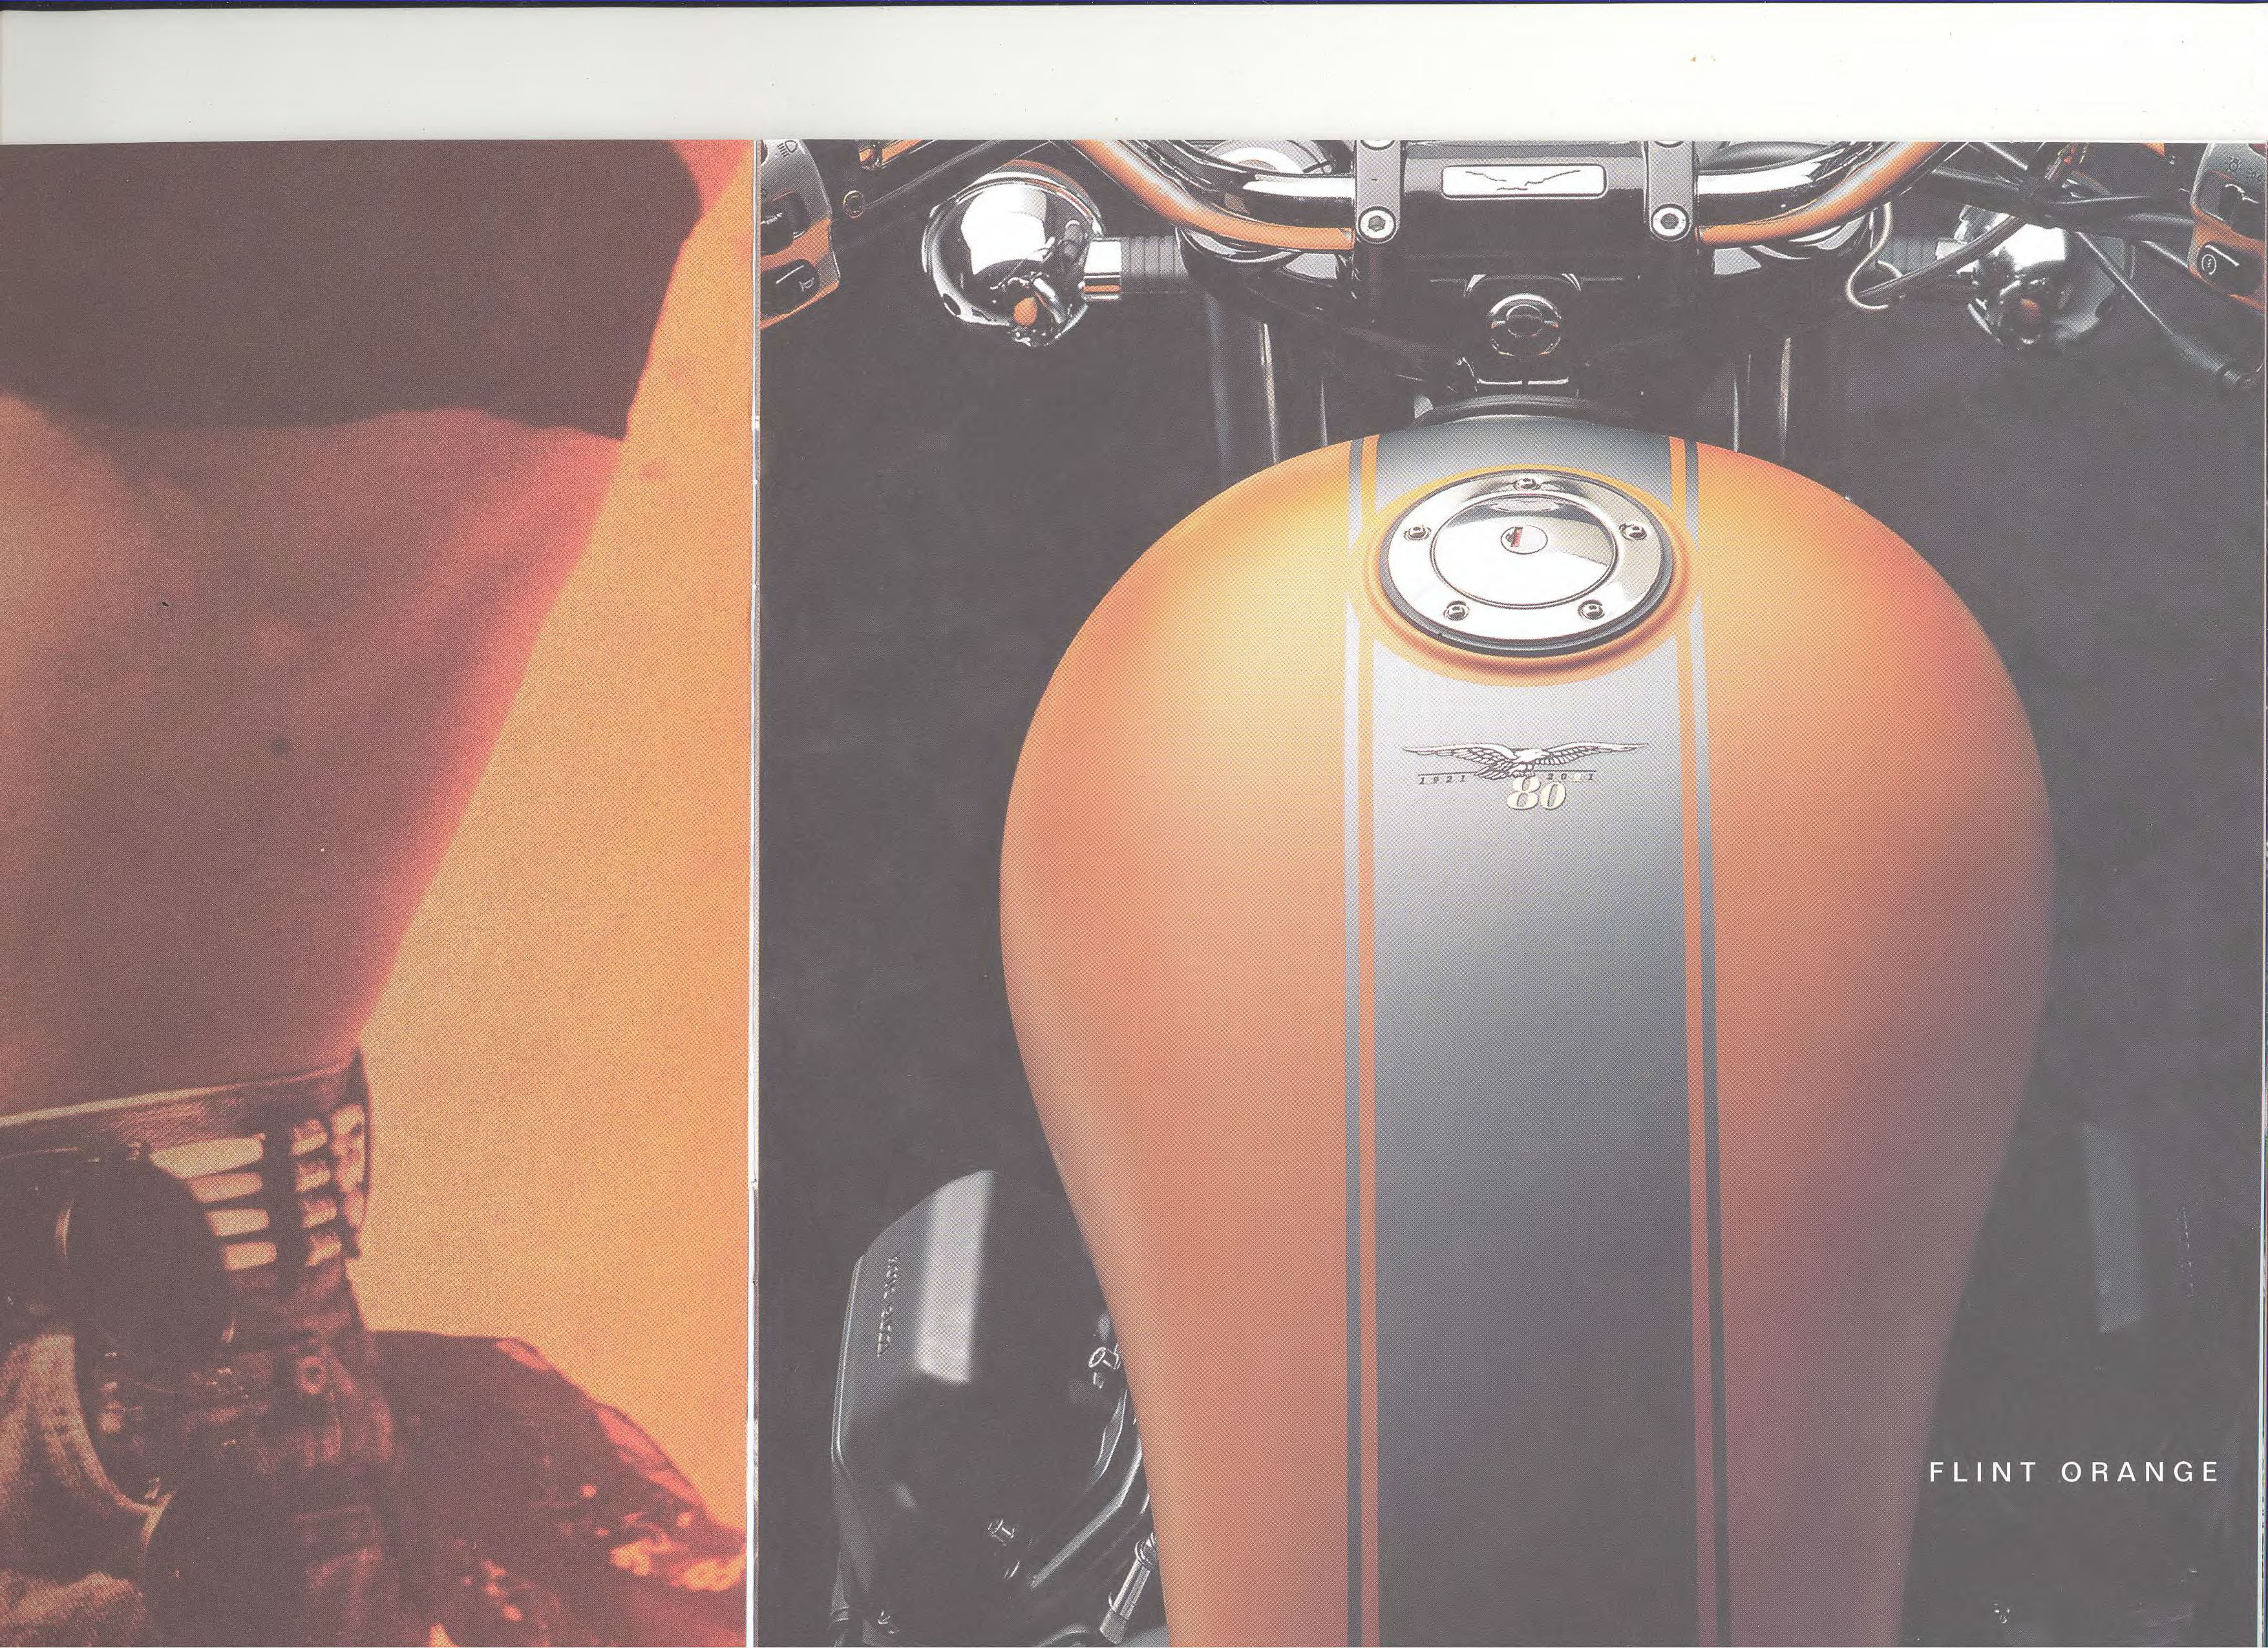 Moto Guzzi factory brochure: California Stone